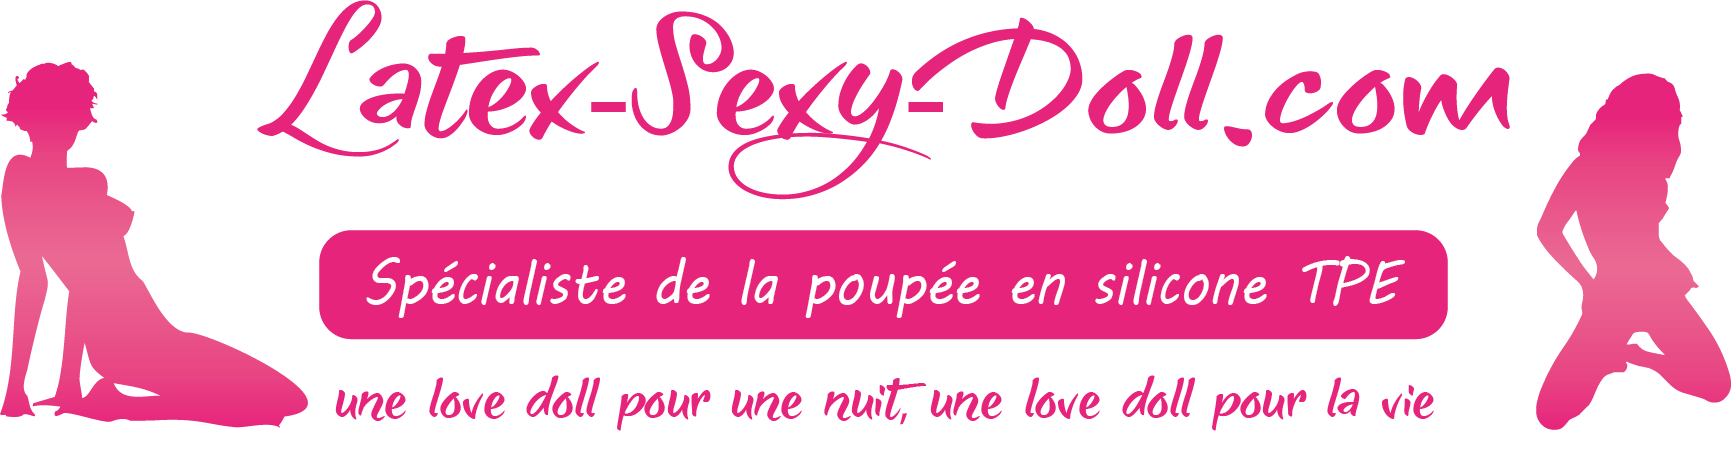 latex-sexy-doll.com